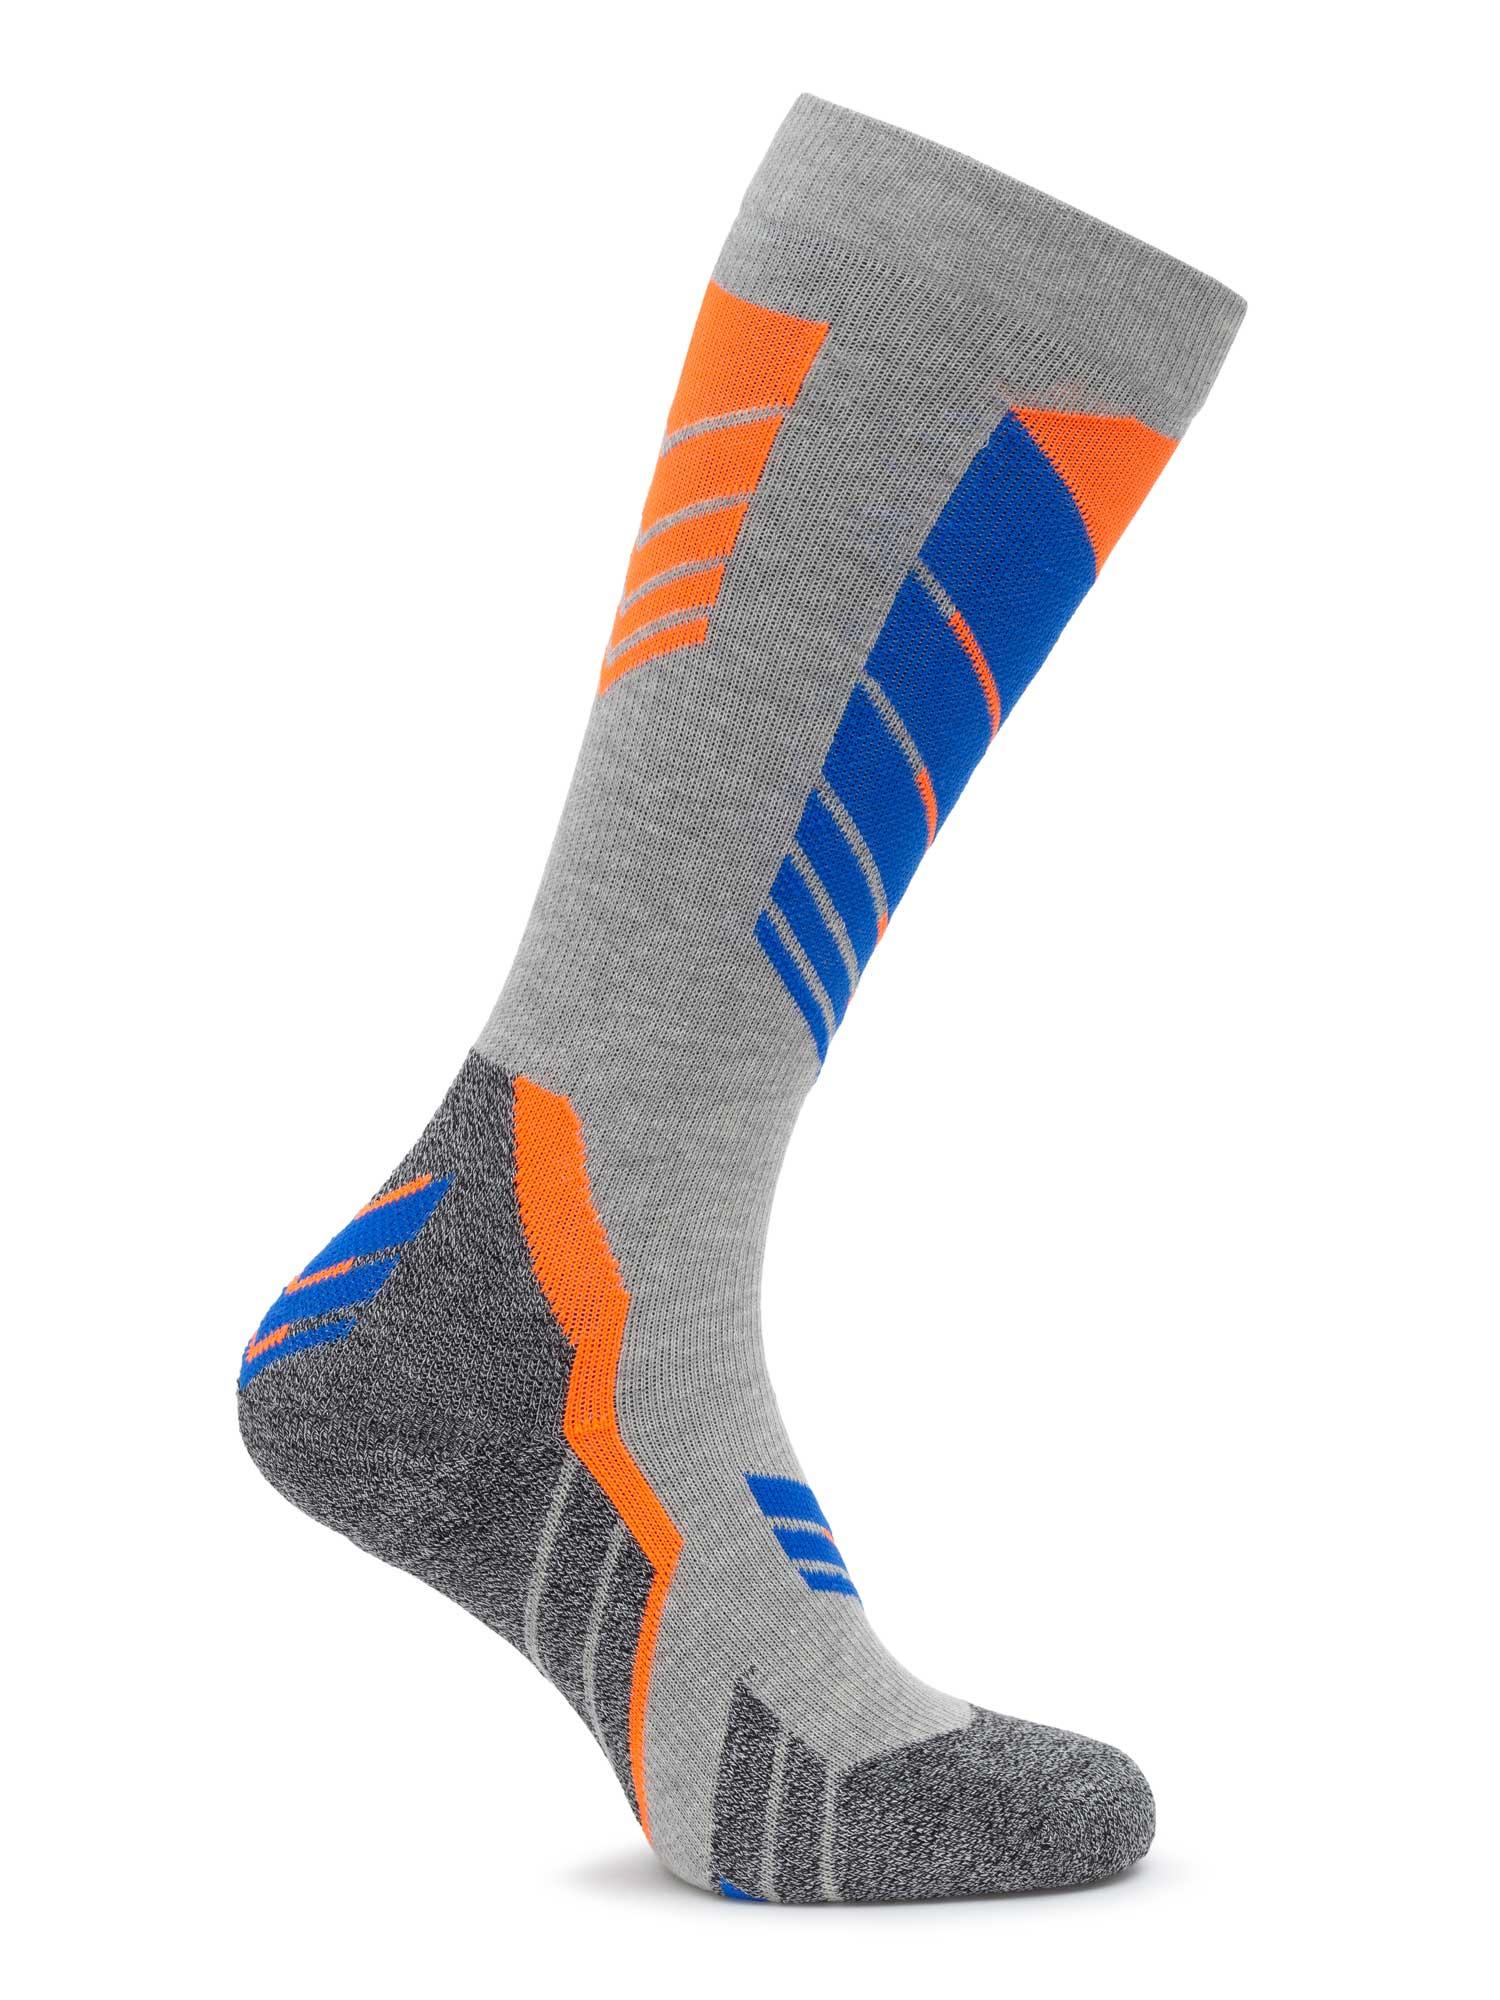 Selected image for BRILLE Dečije čarape Laax 2 Pack Ski SD231112 sivo-plave